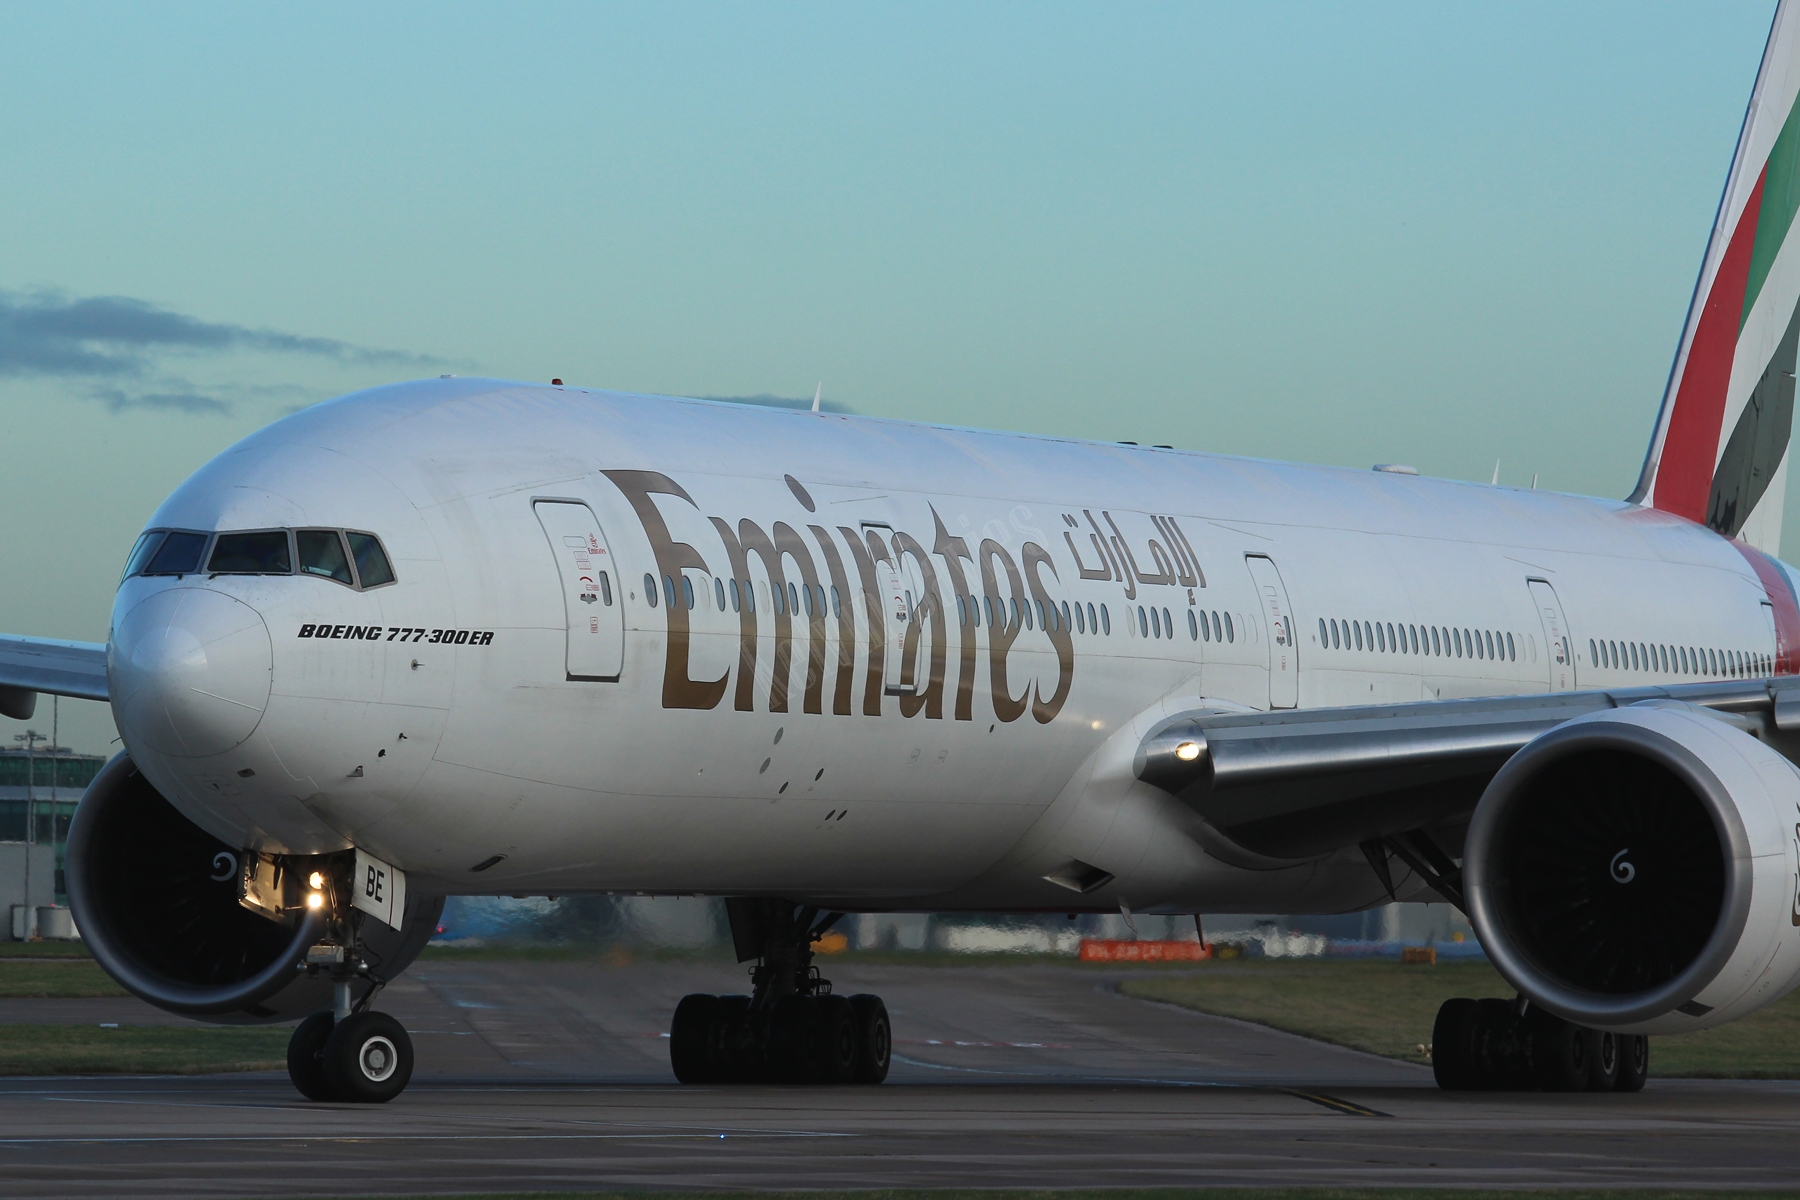 Emirates 777 A6-EBE